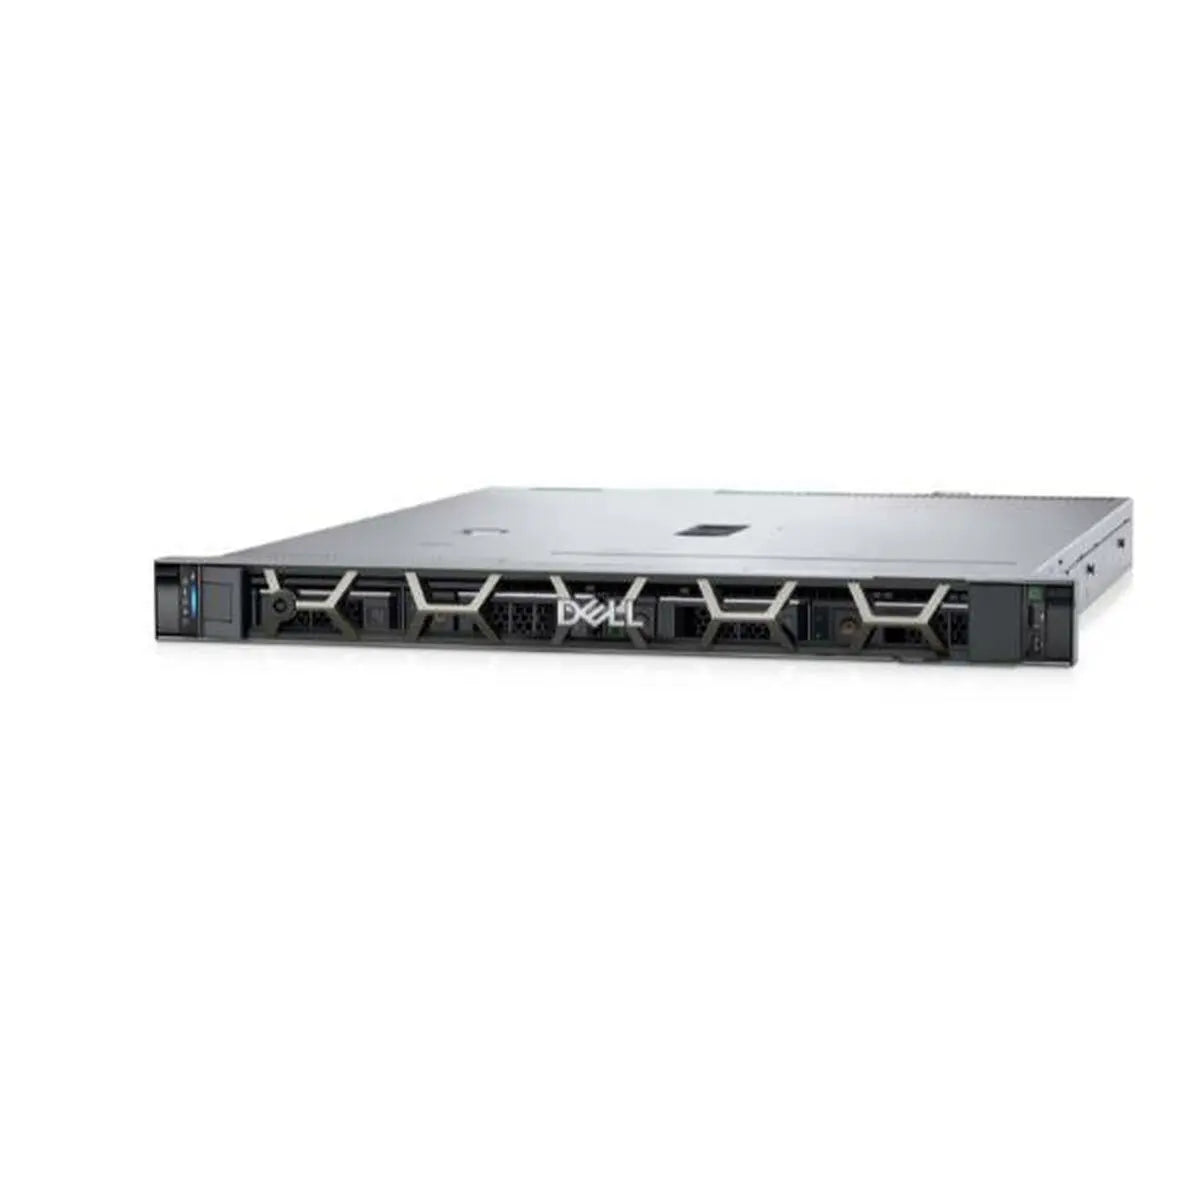 Server Dell R250 IXE-2334 16 GB RAM - IGSI Europe Ltd